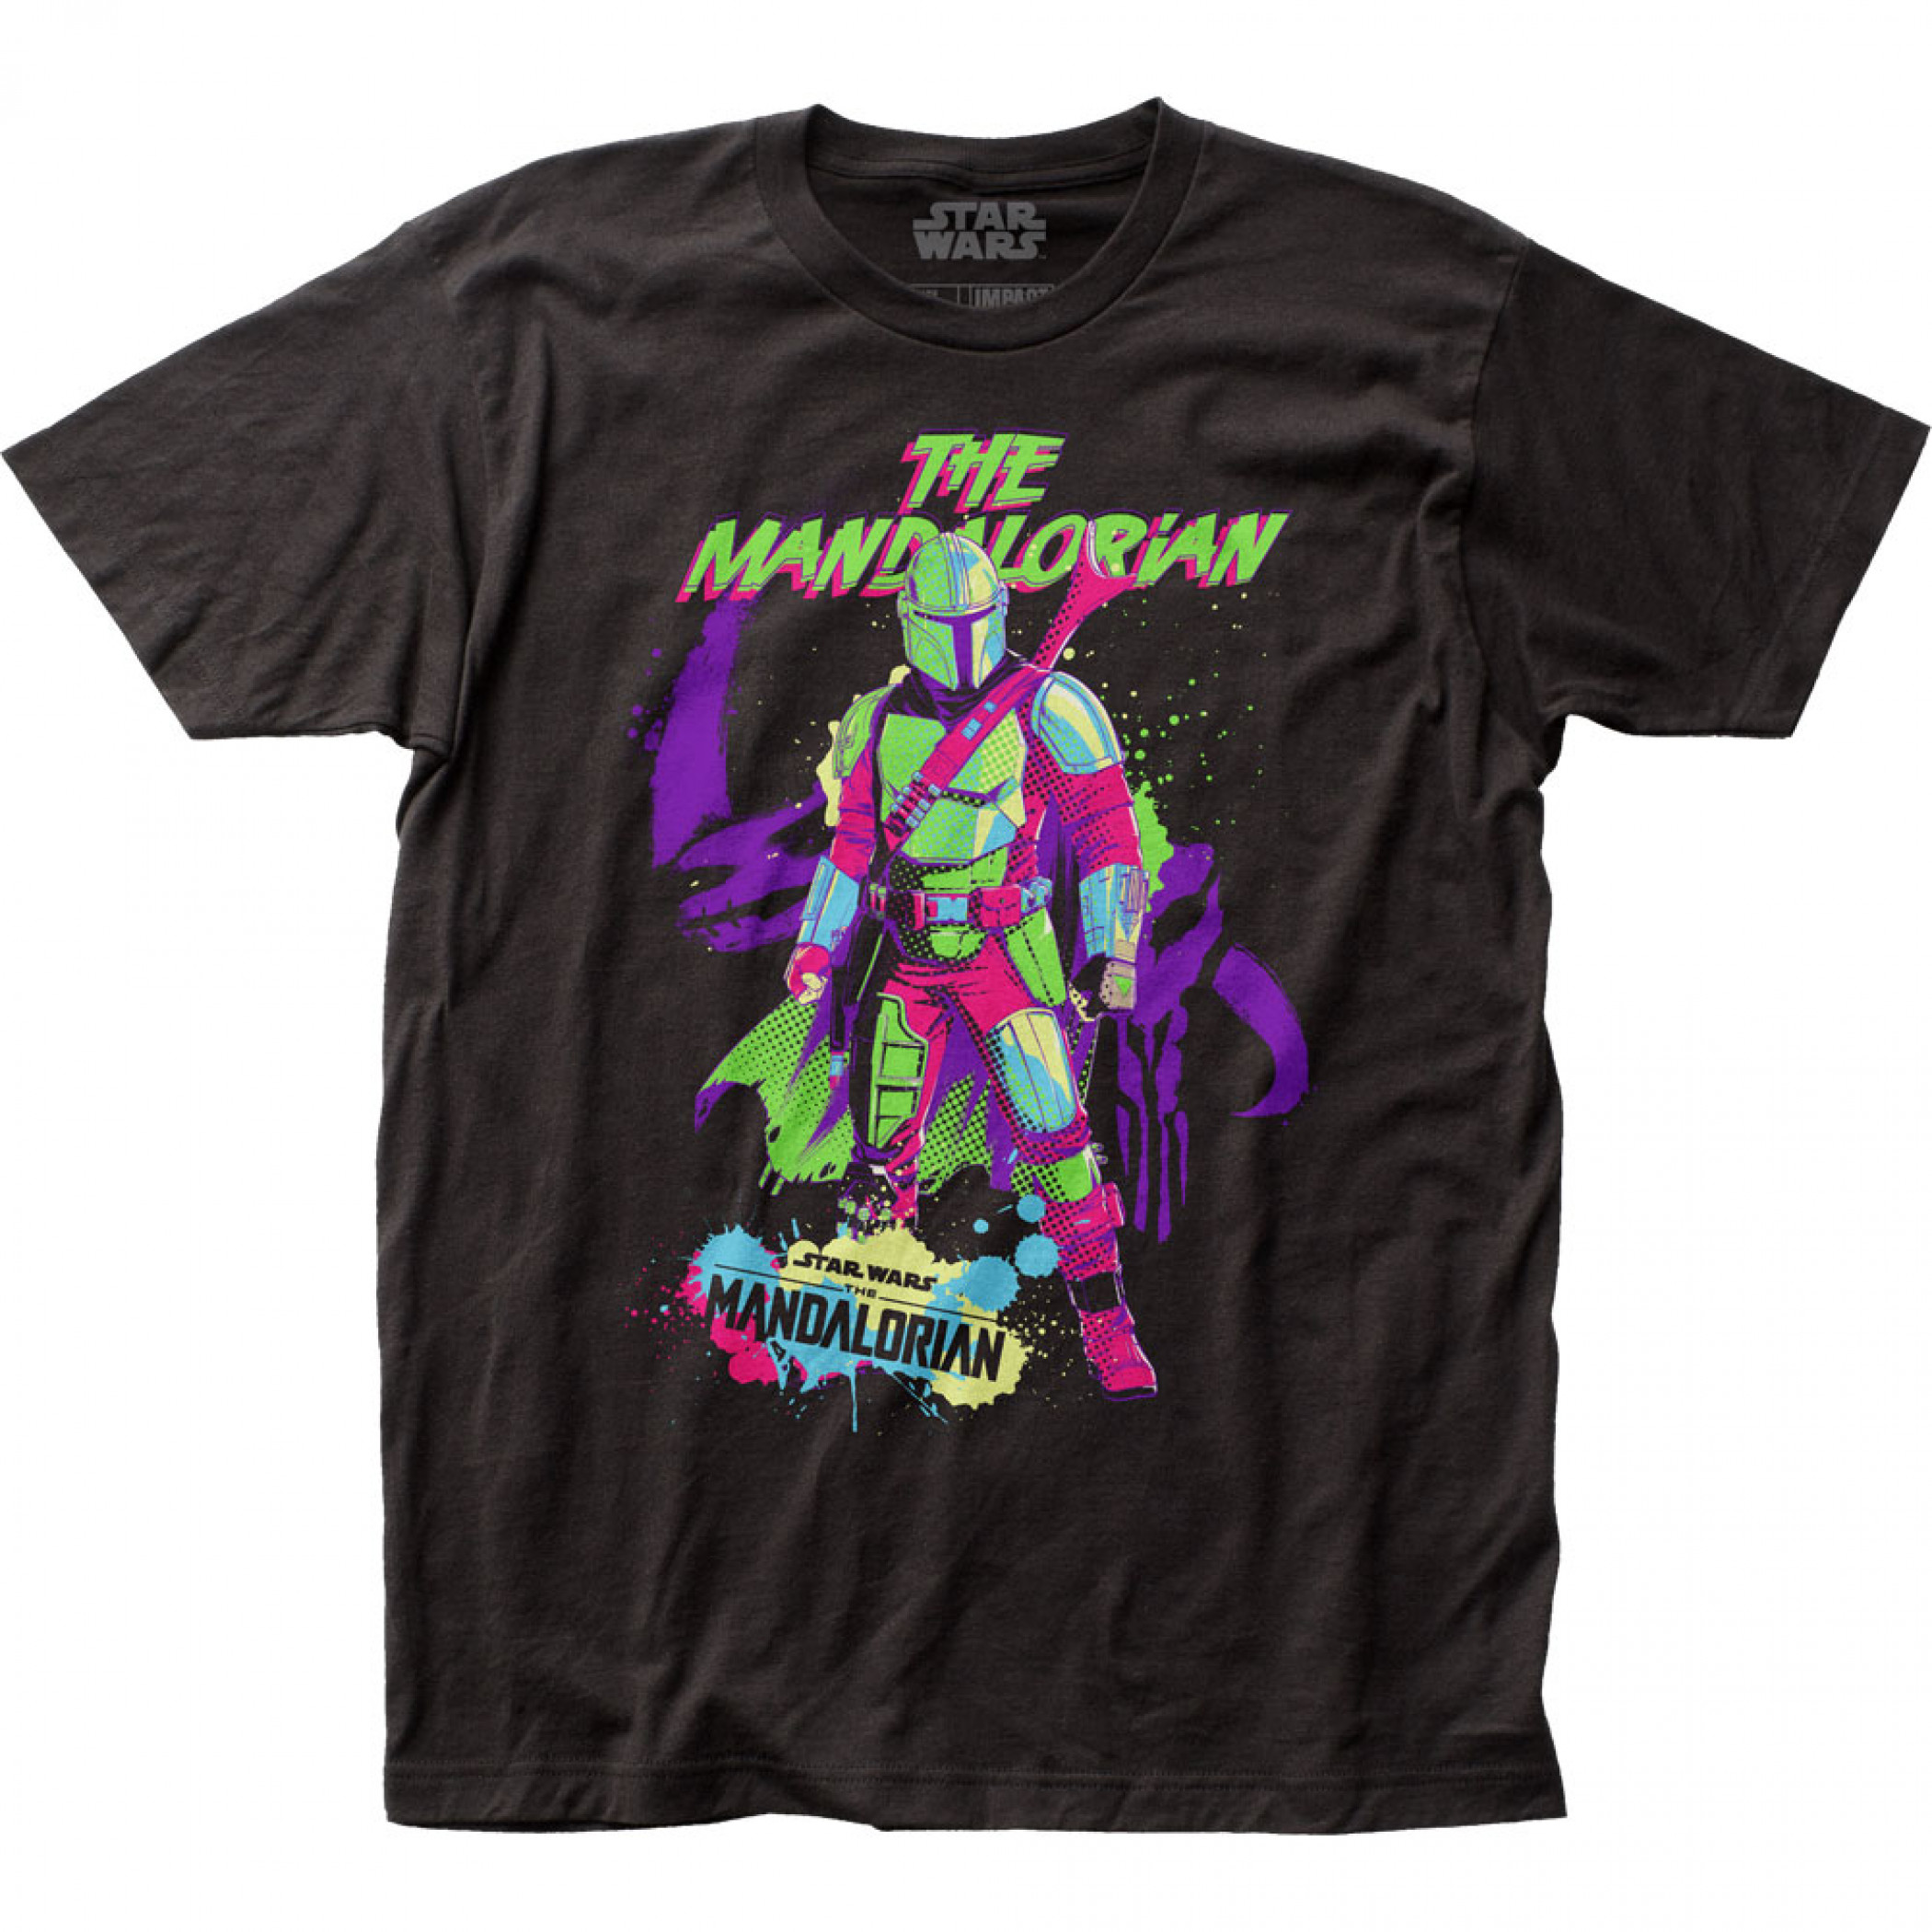 Star Wars The Mandalorian Neon Retro Styled T-Shirt